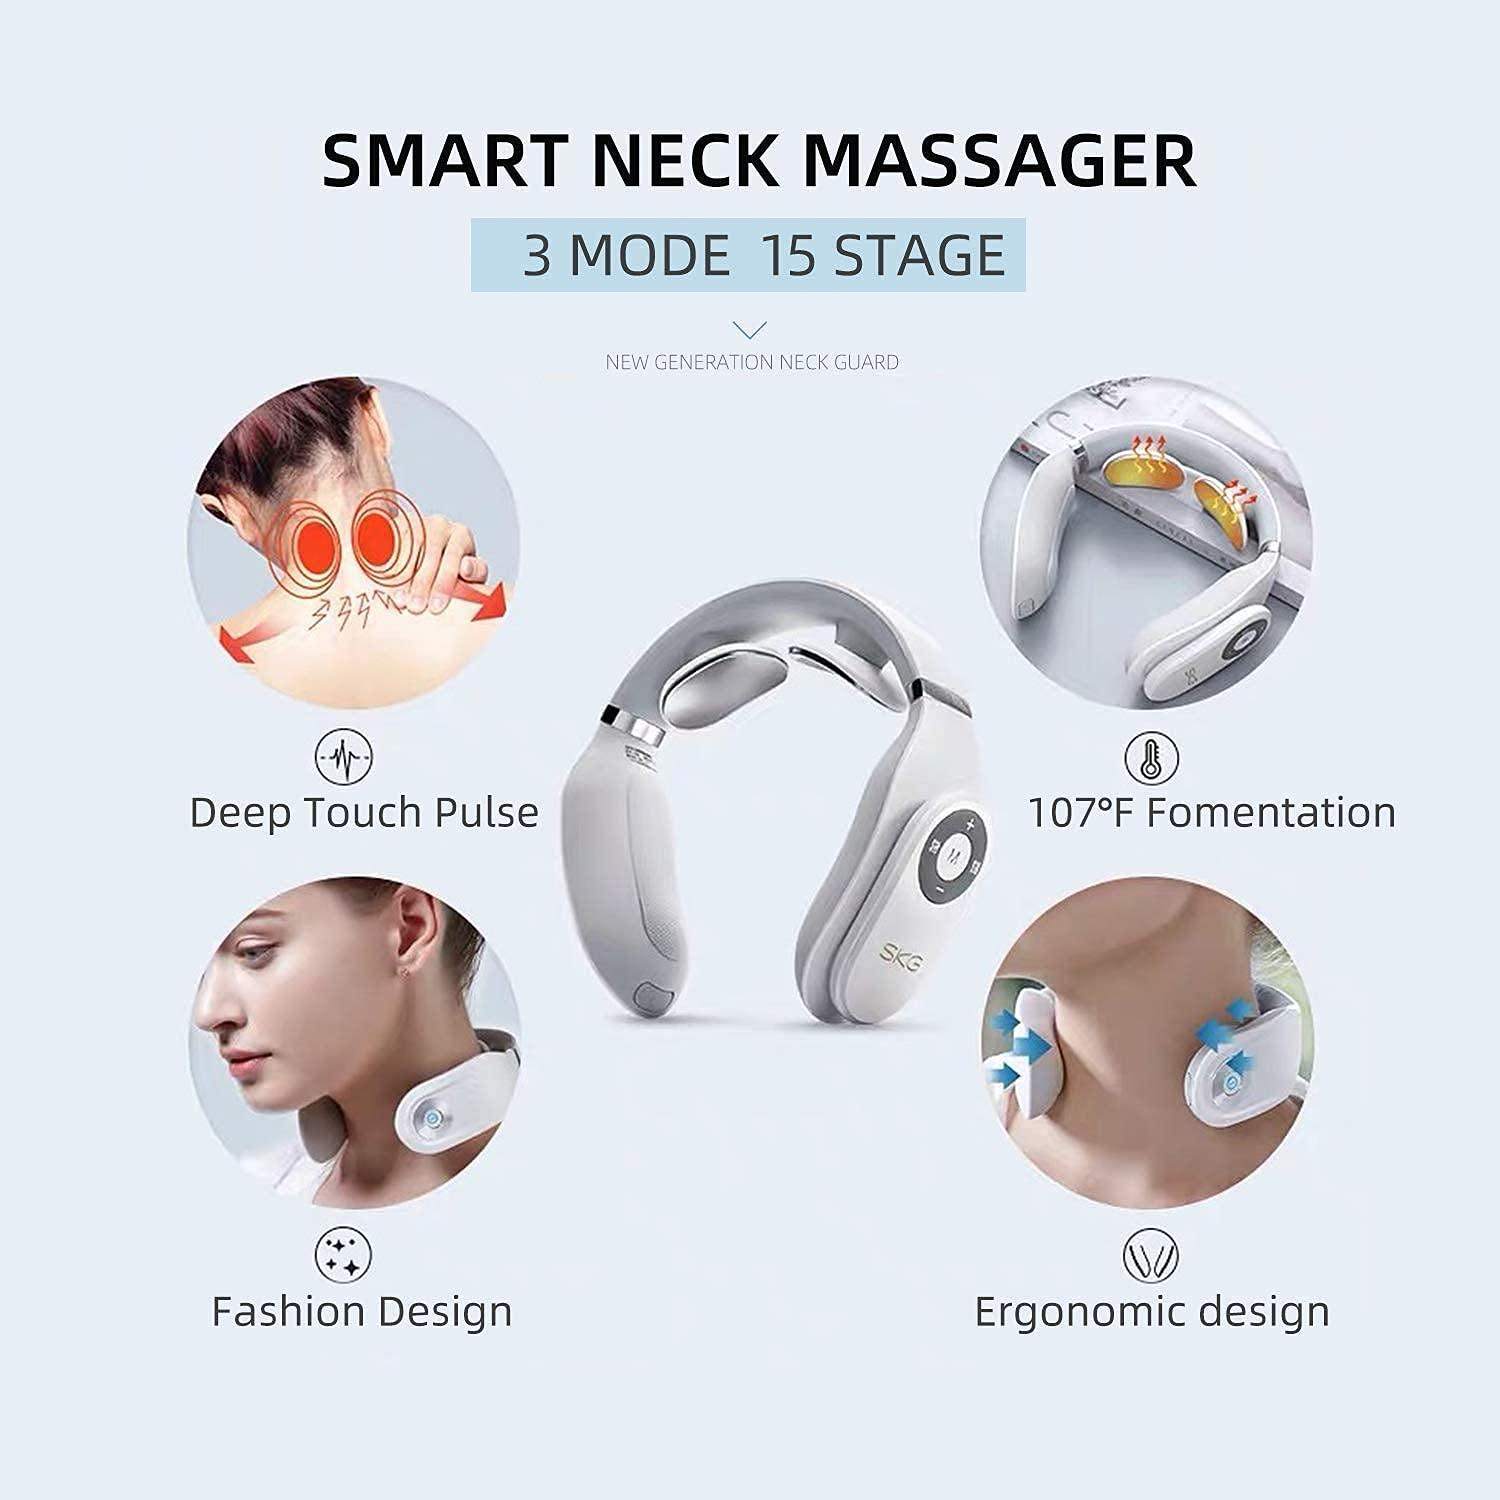 SKG K5 Pro neck TENS massager review - The Gadgeteer